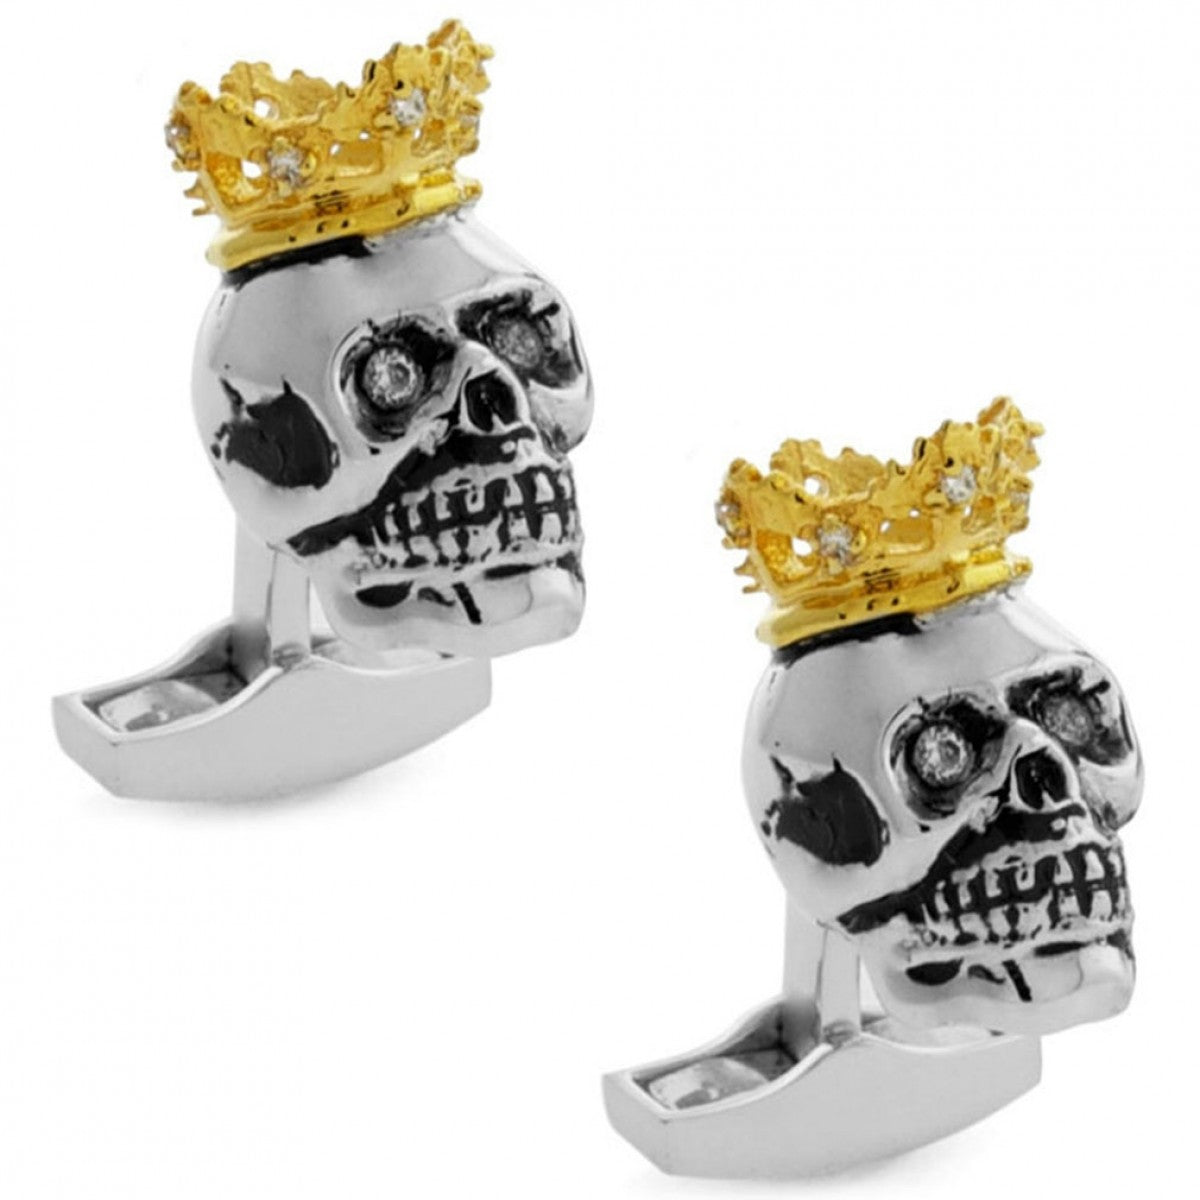 Tateossian King Skull with Gold Crown Cufflinks, Silver